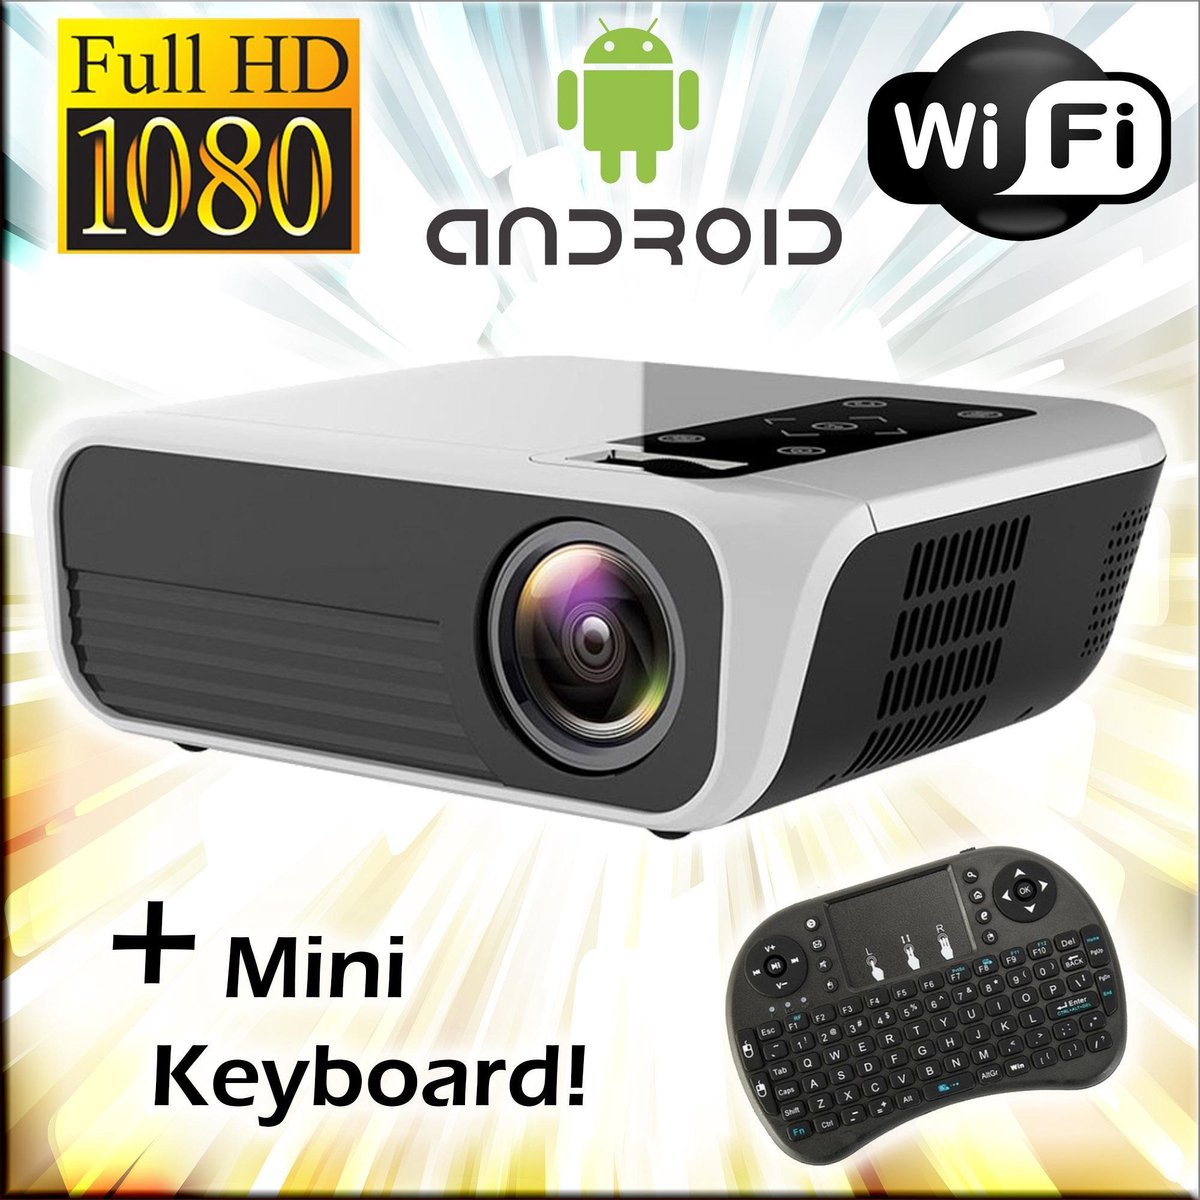 Full HD beamer / 1080p projector + Android 7.1 + Wifi +Digital Keystone + Phone mirroring + Bluetooth + mini keyboard! - Hometheater